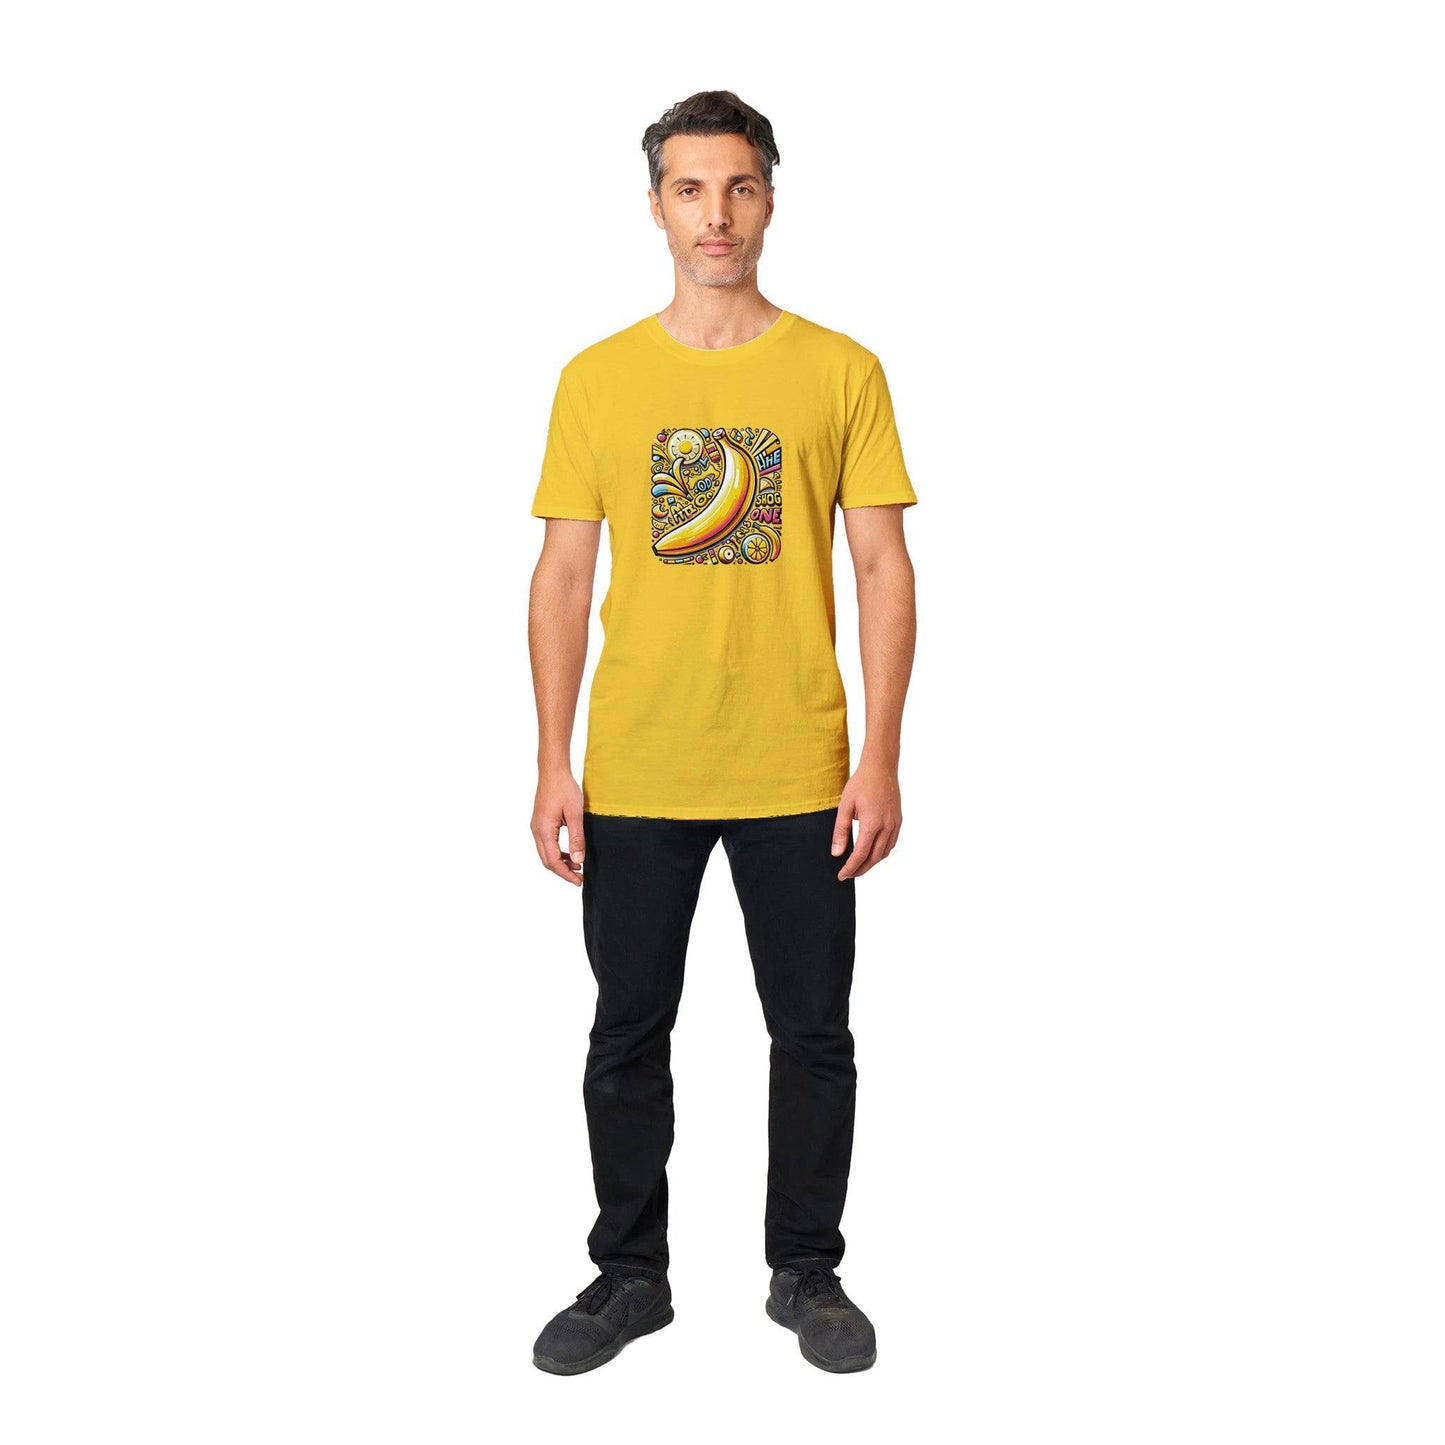 Banana Delight T-Shirt - 100% soft, breathable cotton - BeinCart